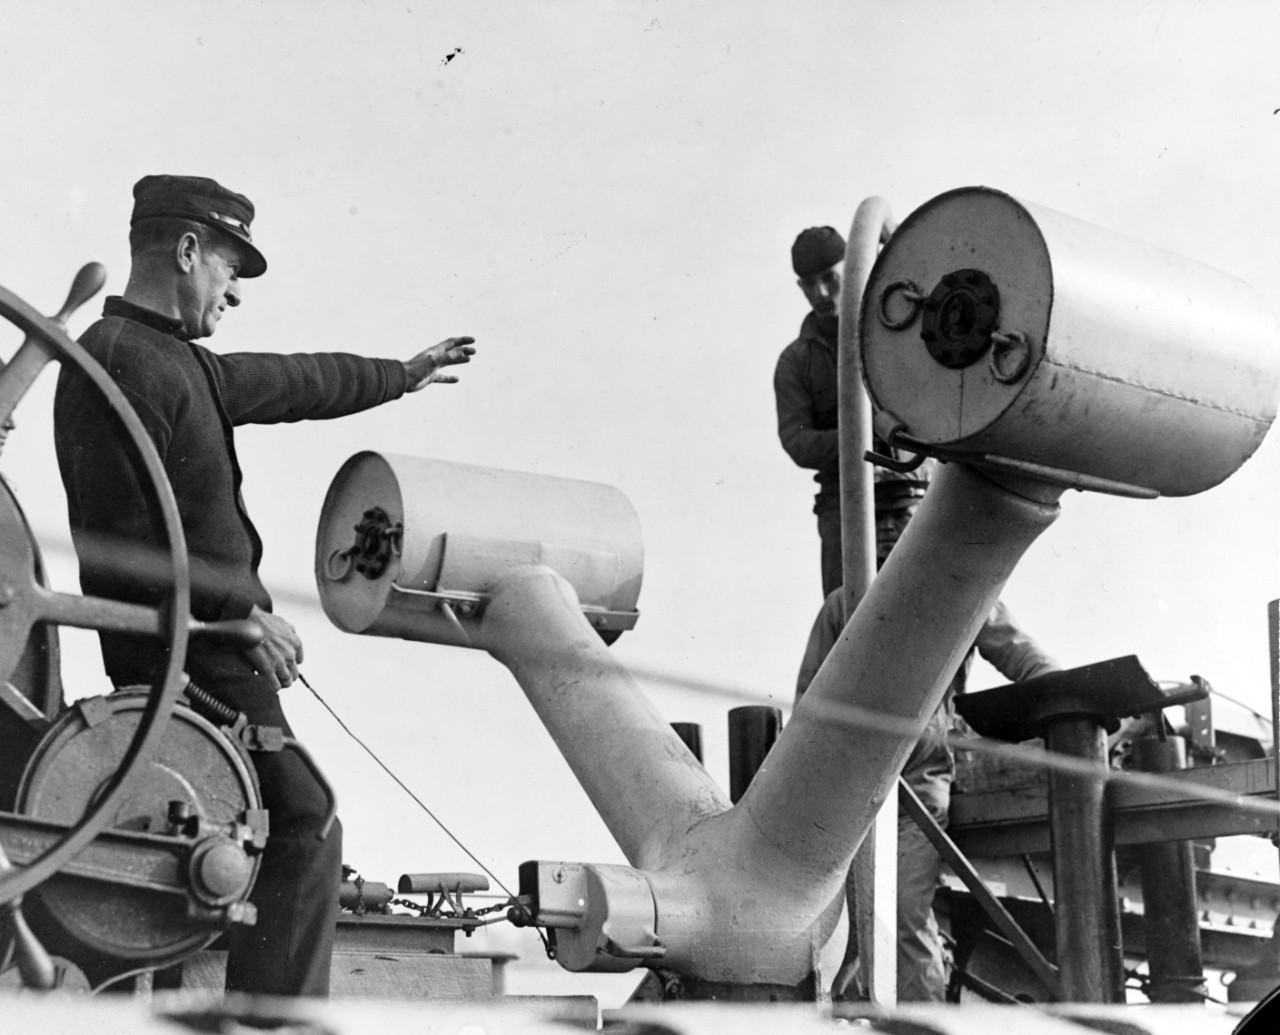 Photograph of Y-gun preparing to fire.